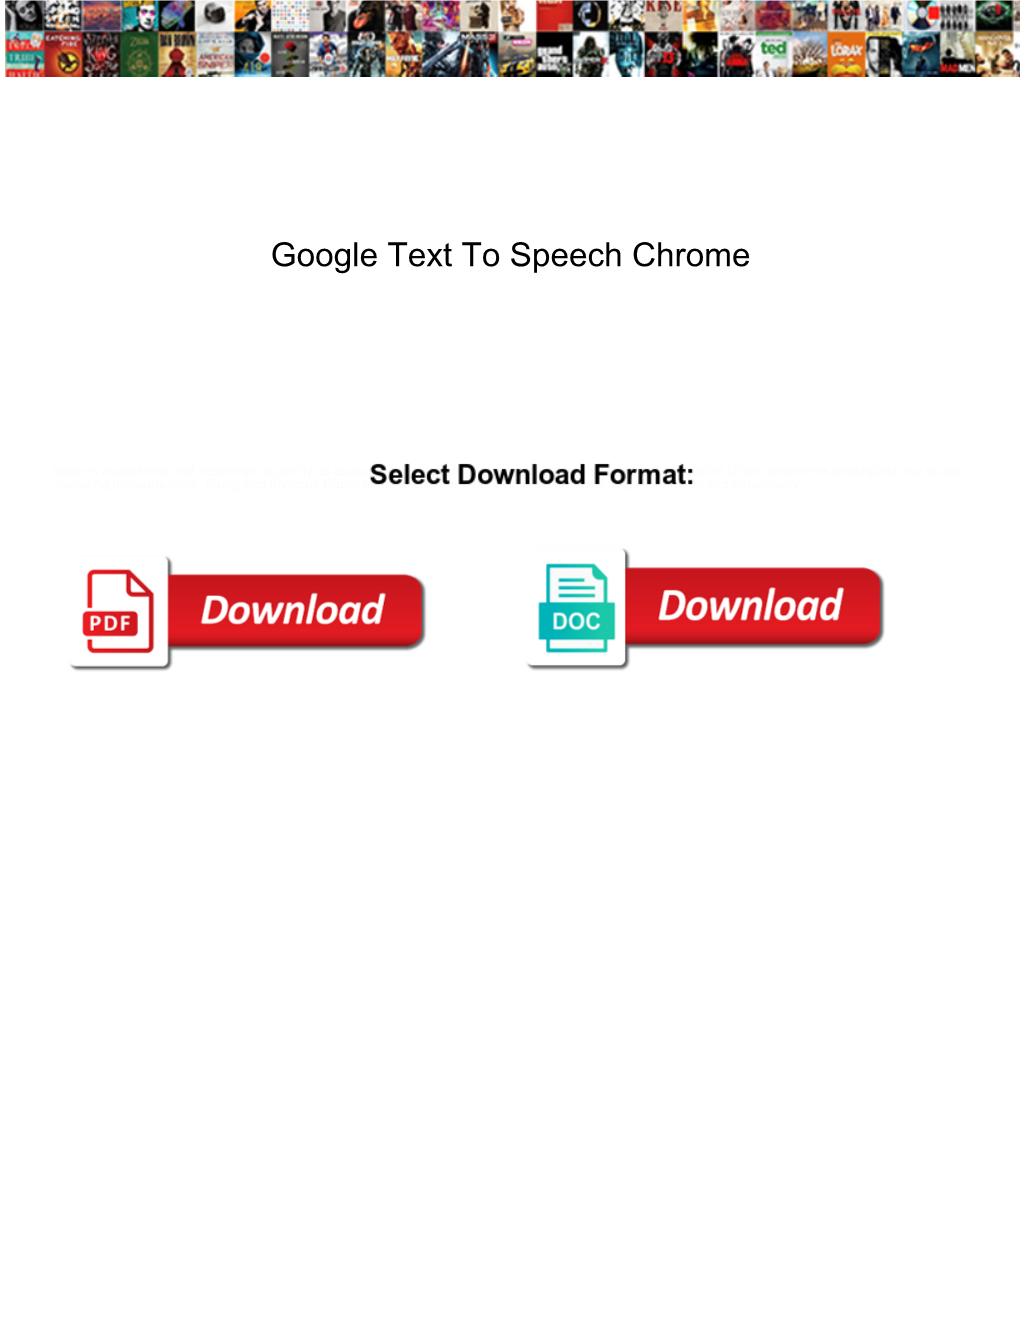 Google Text to Speech Chrome